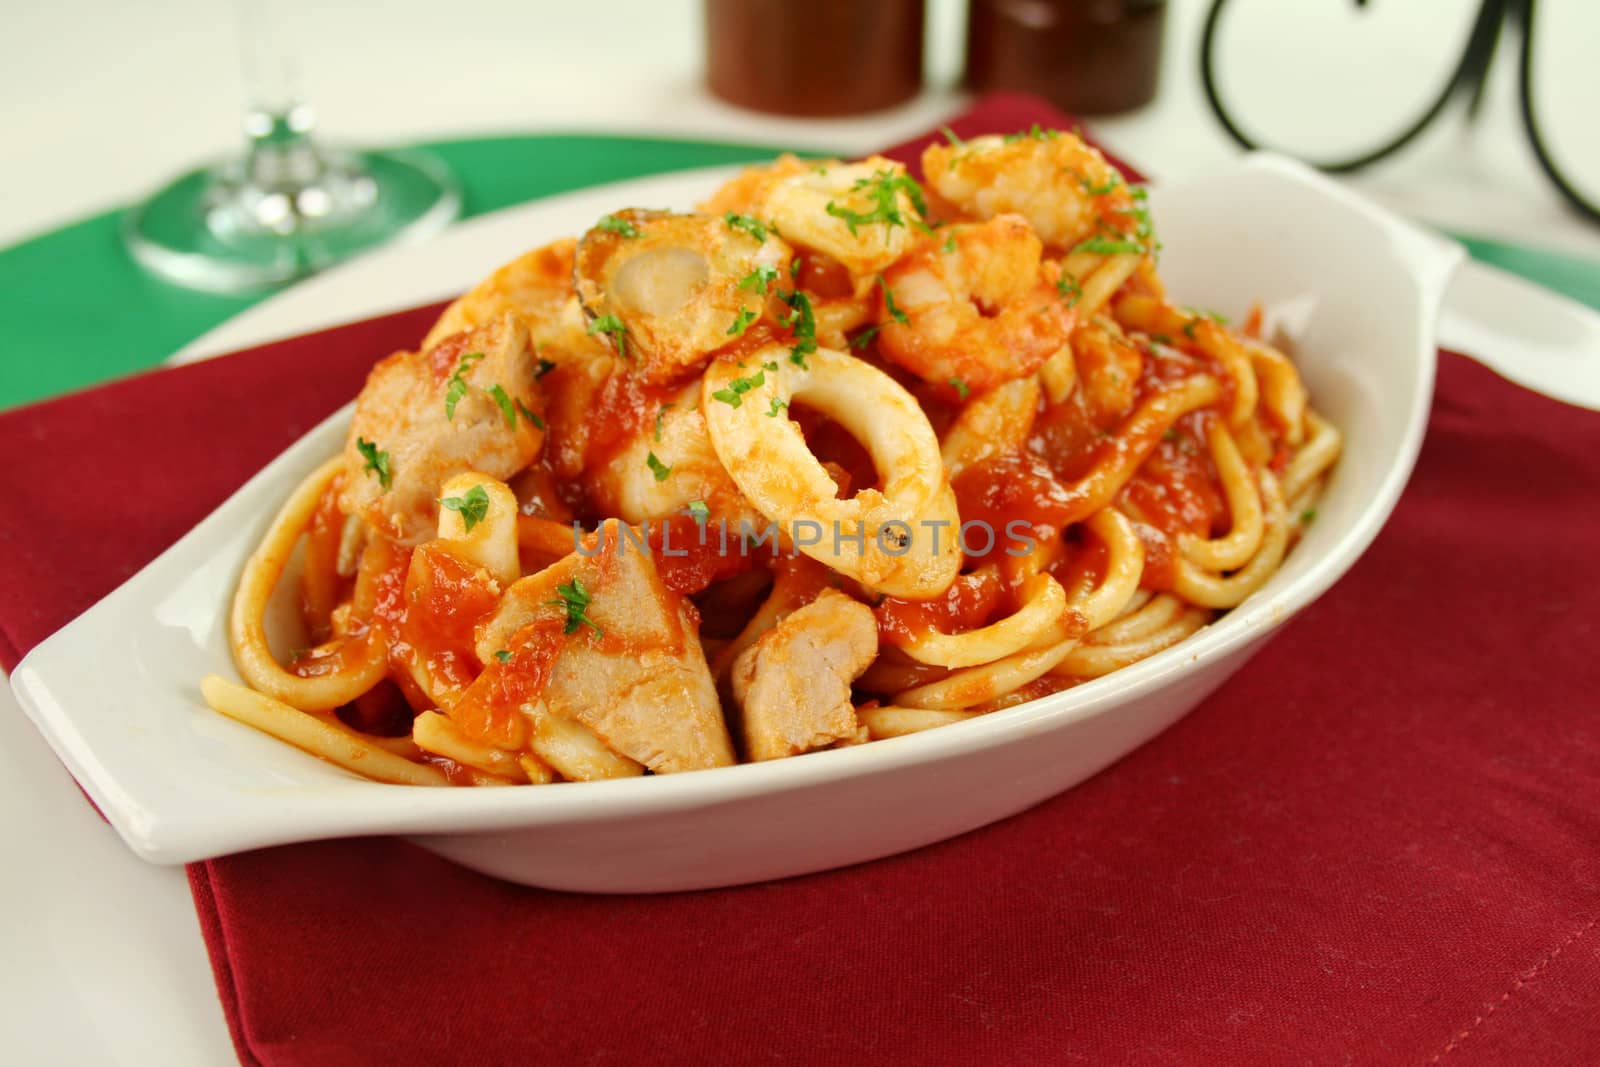 Spaghetti Marinara by jabiru